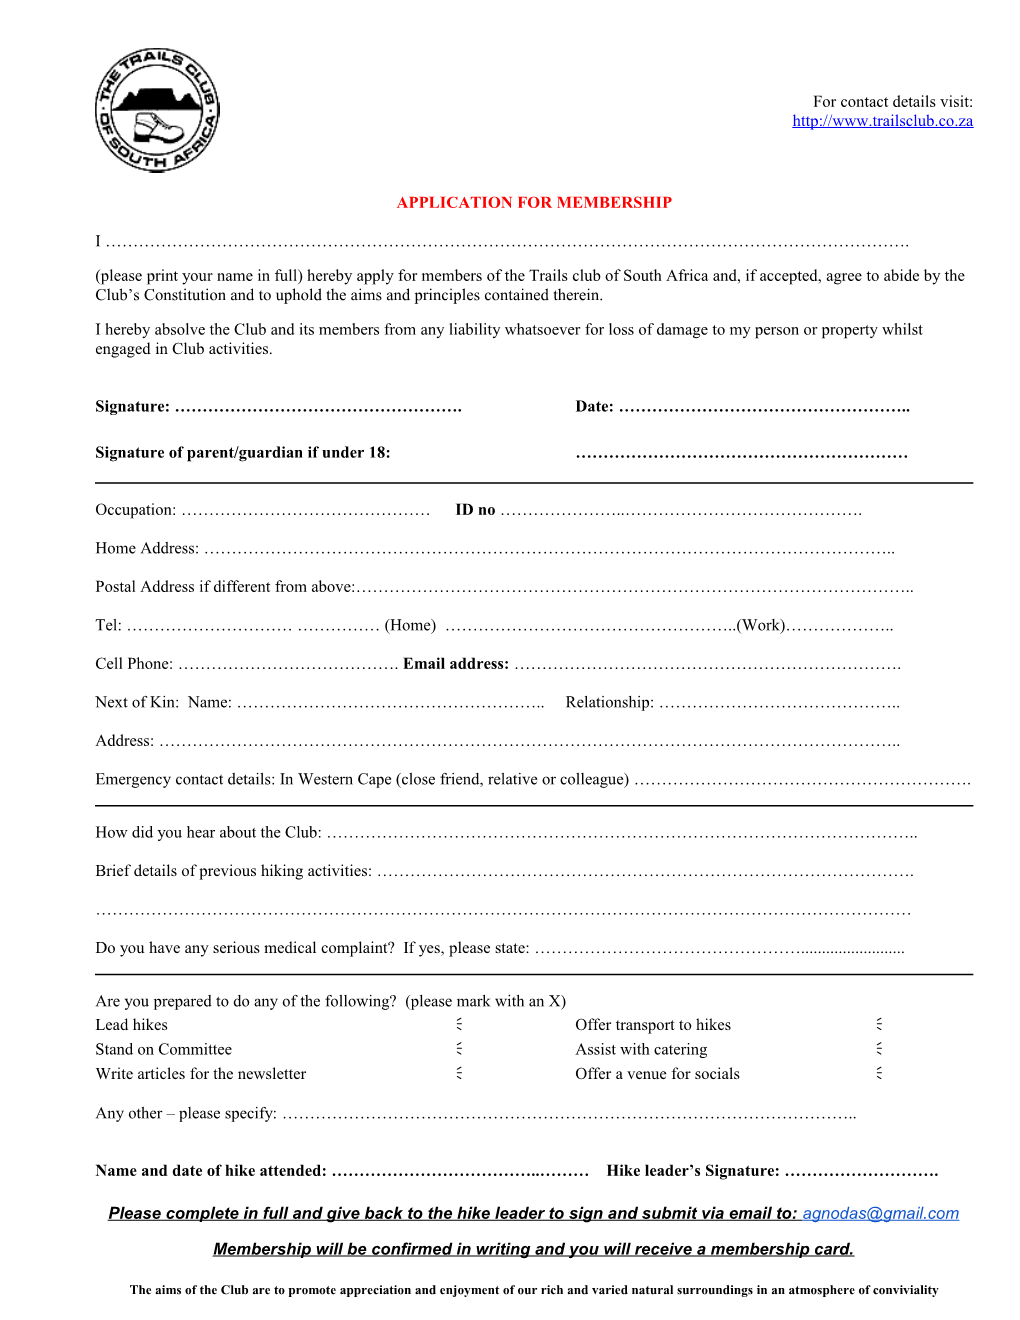 Application for Membership s20